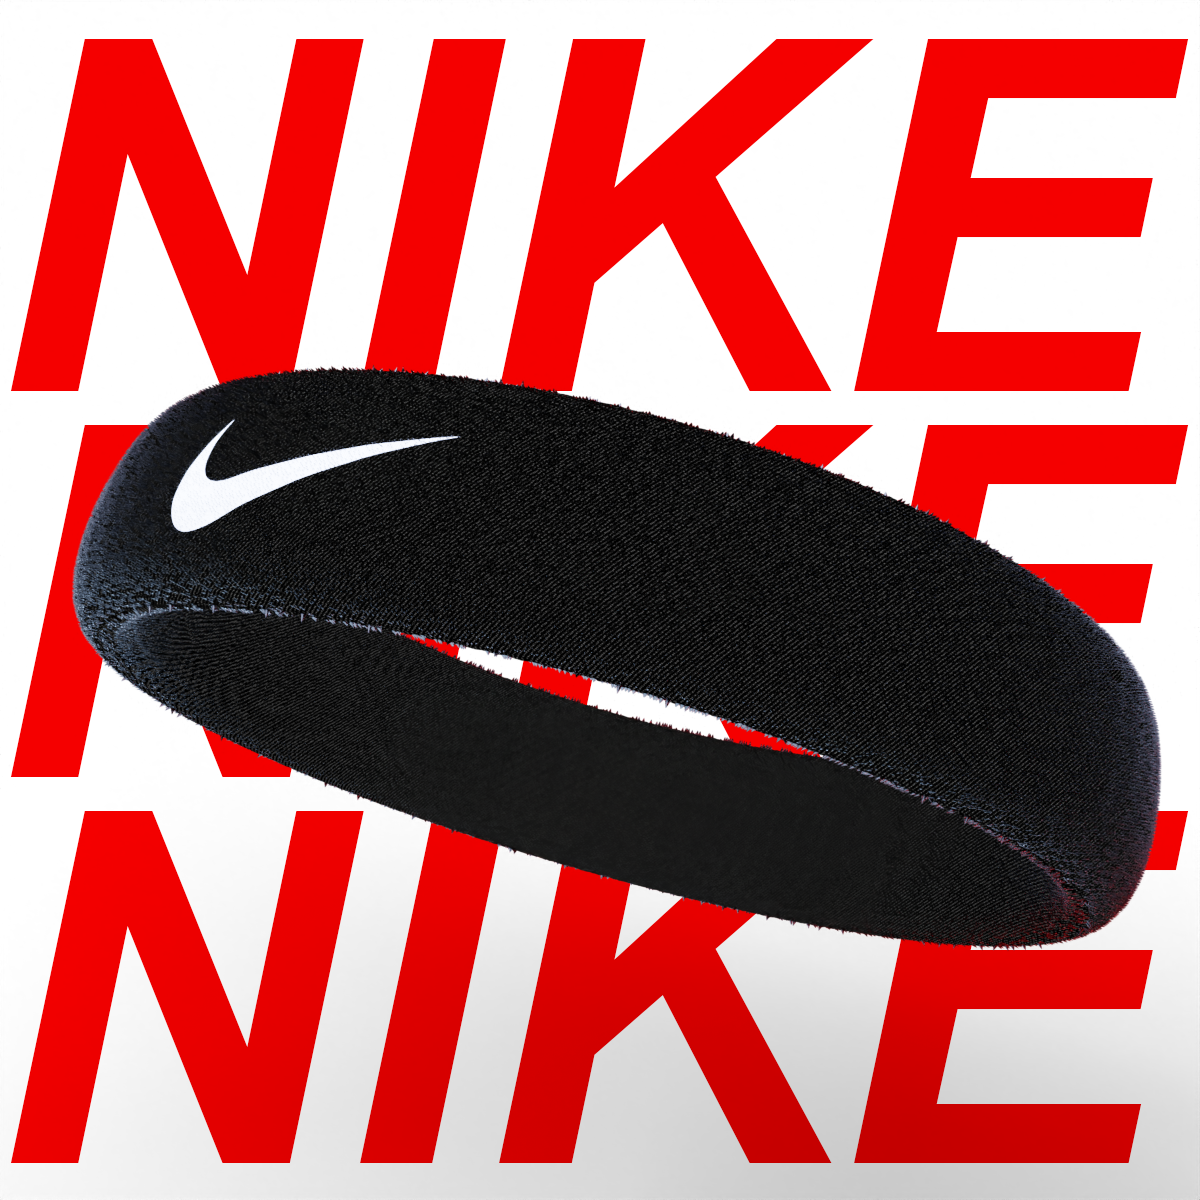 Nike Swoosh Headband - Finished Projects - Blender Artists Community